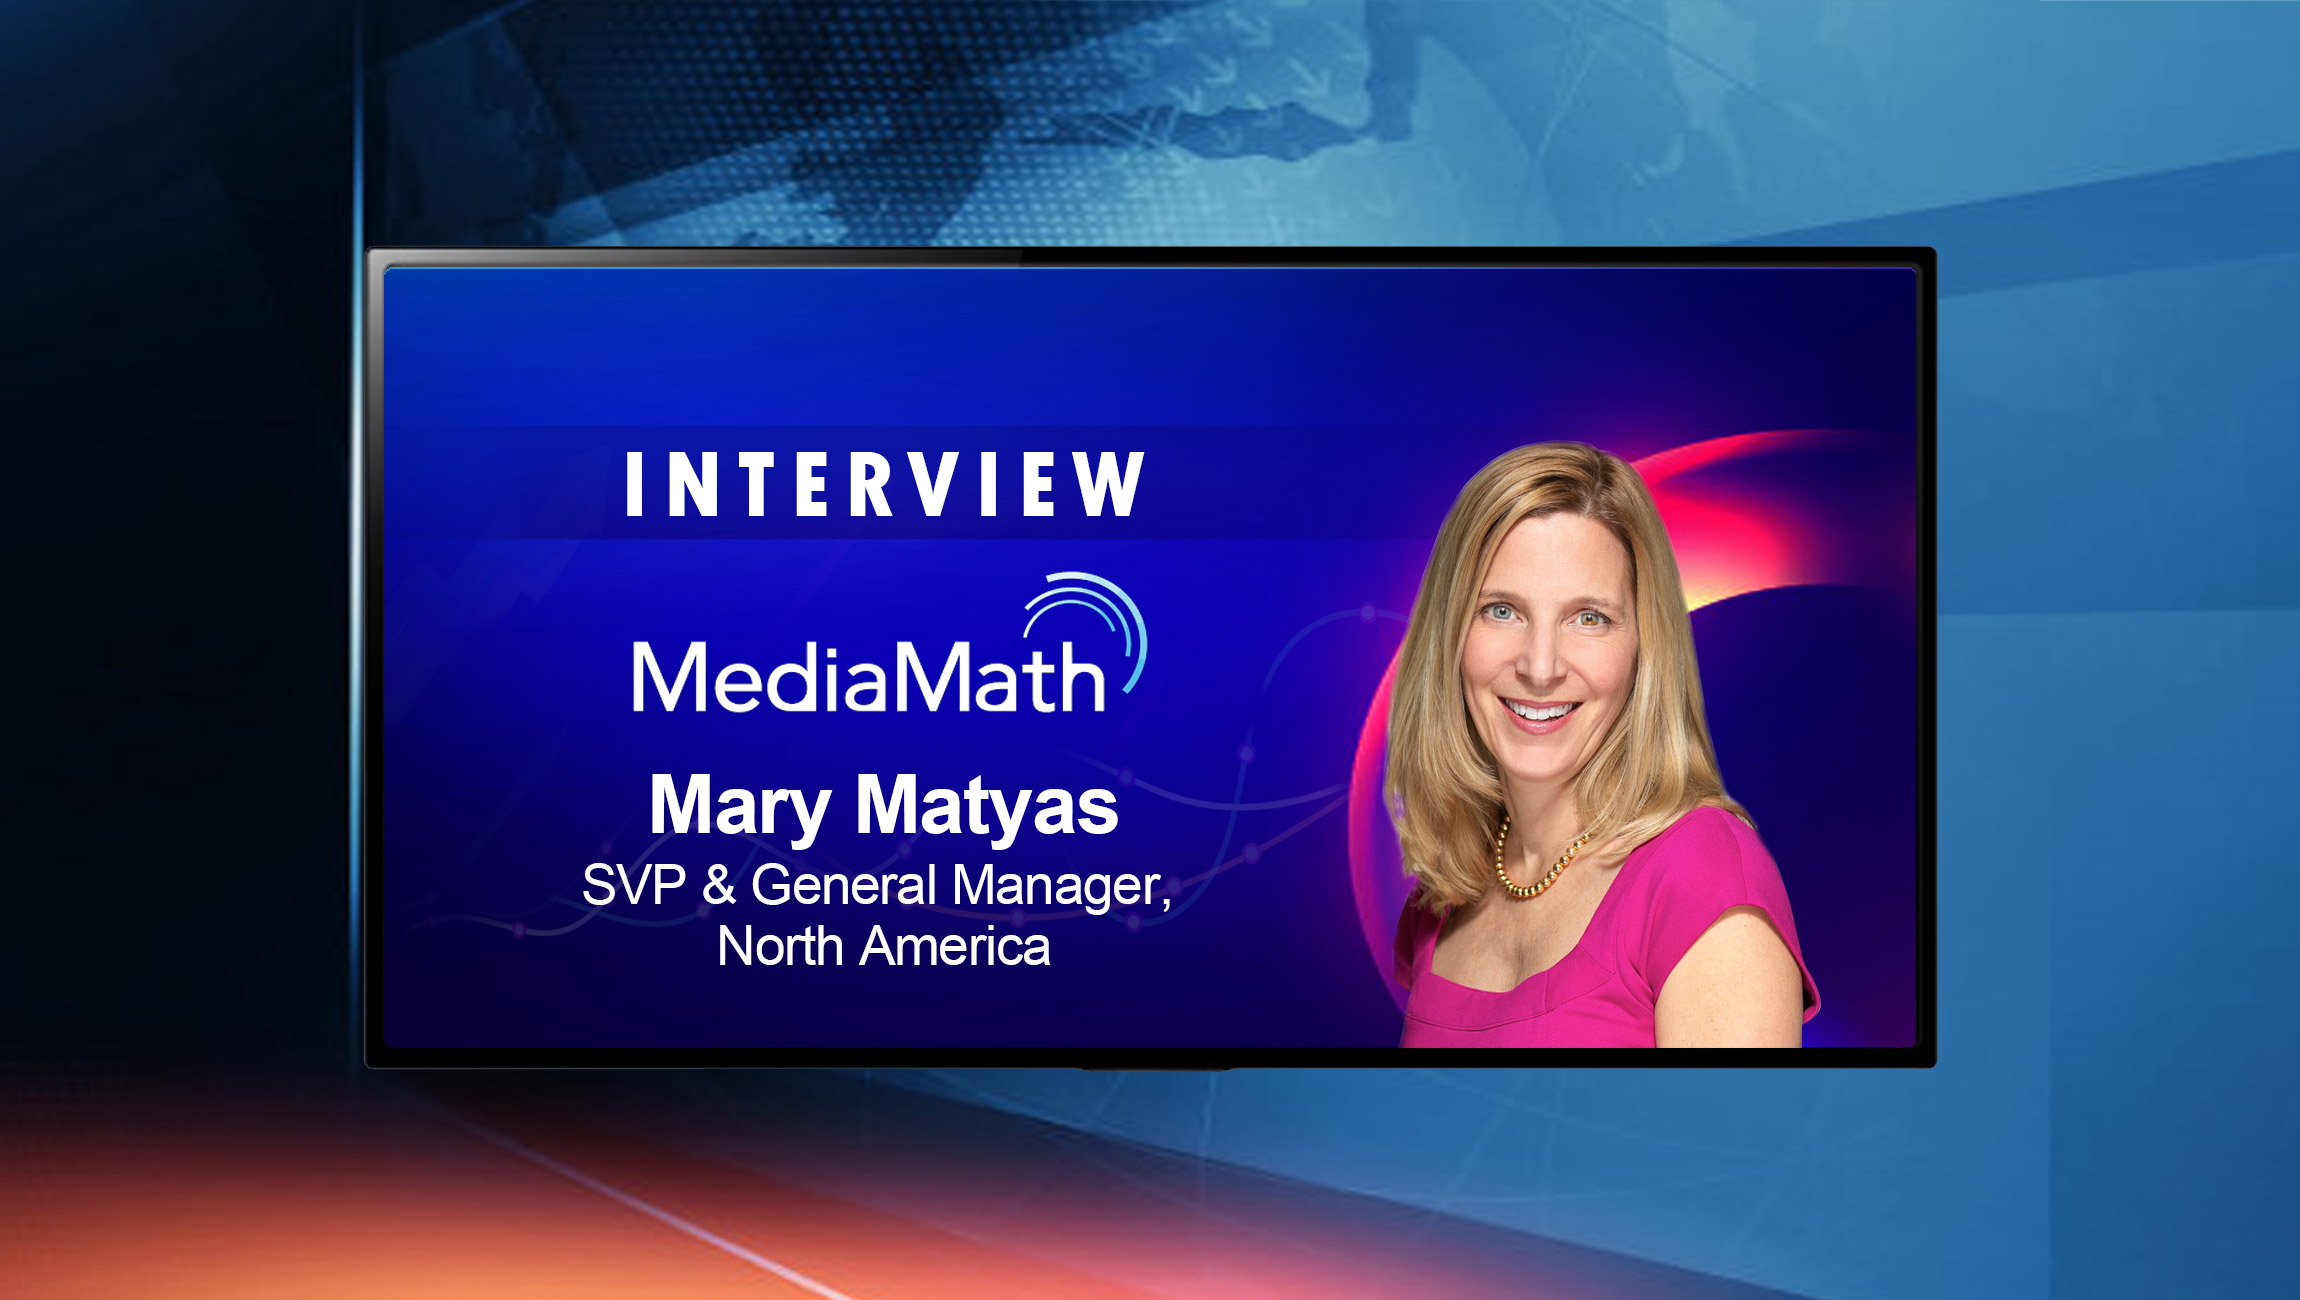 Mary-Matyas_SalesTechStar - Interview with MediaMath